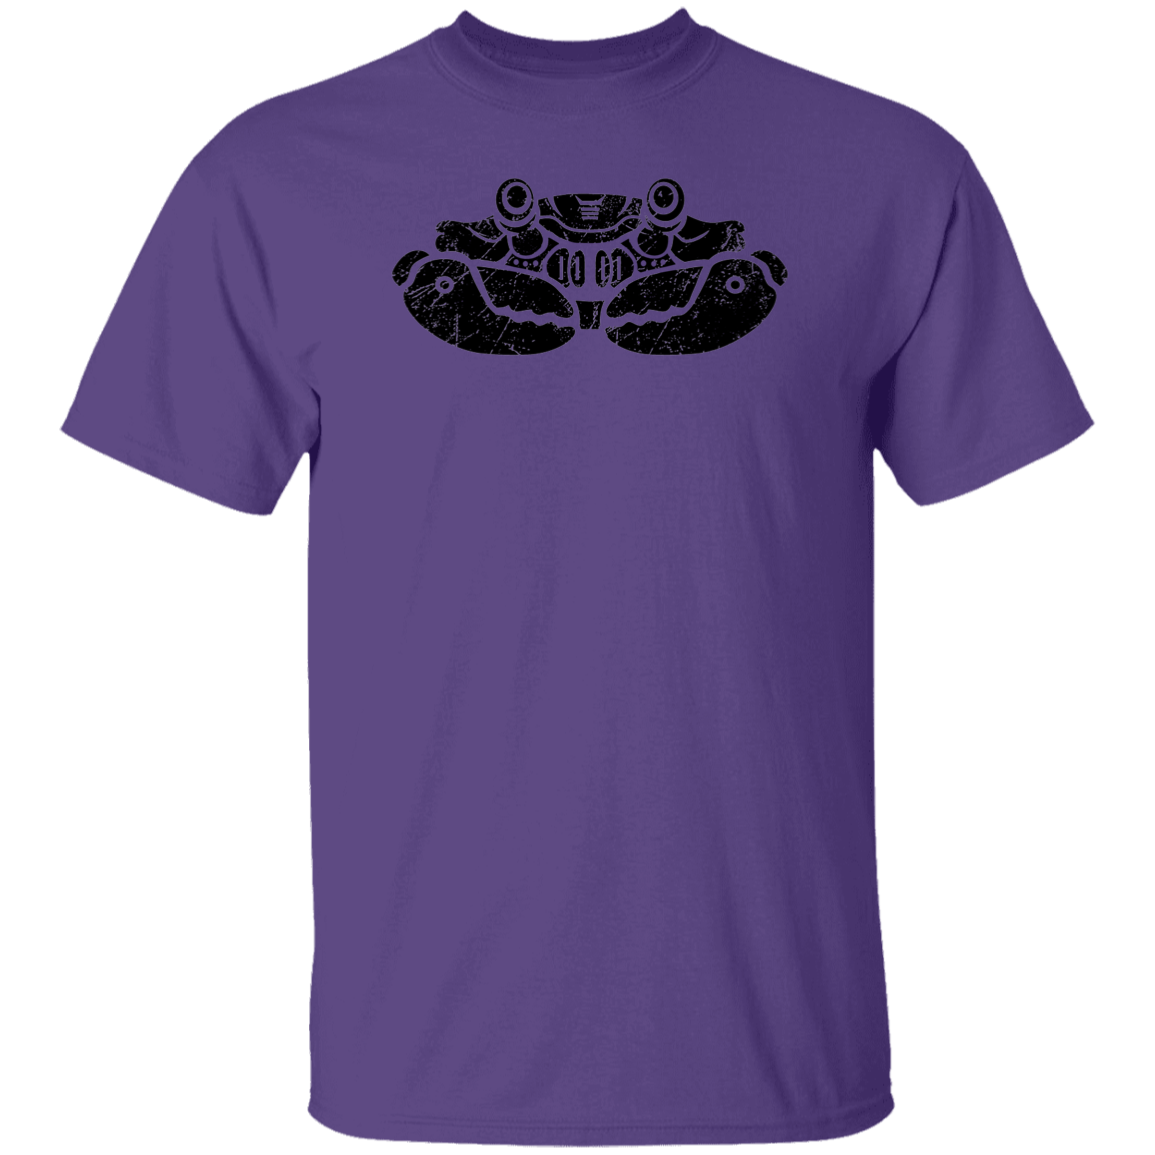 Black Distressed Emblem T-Shirt for Kids (Crab/Clamps)